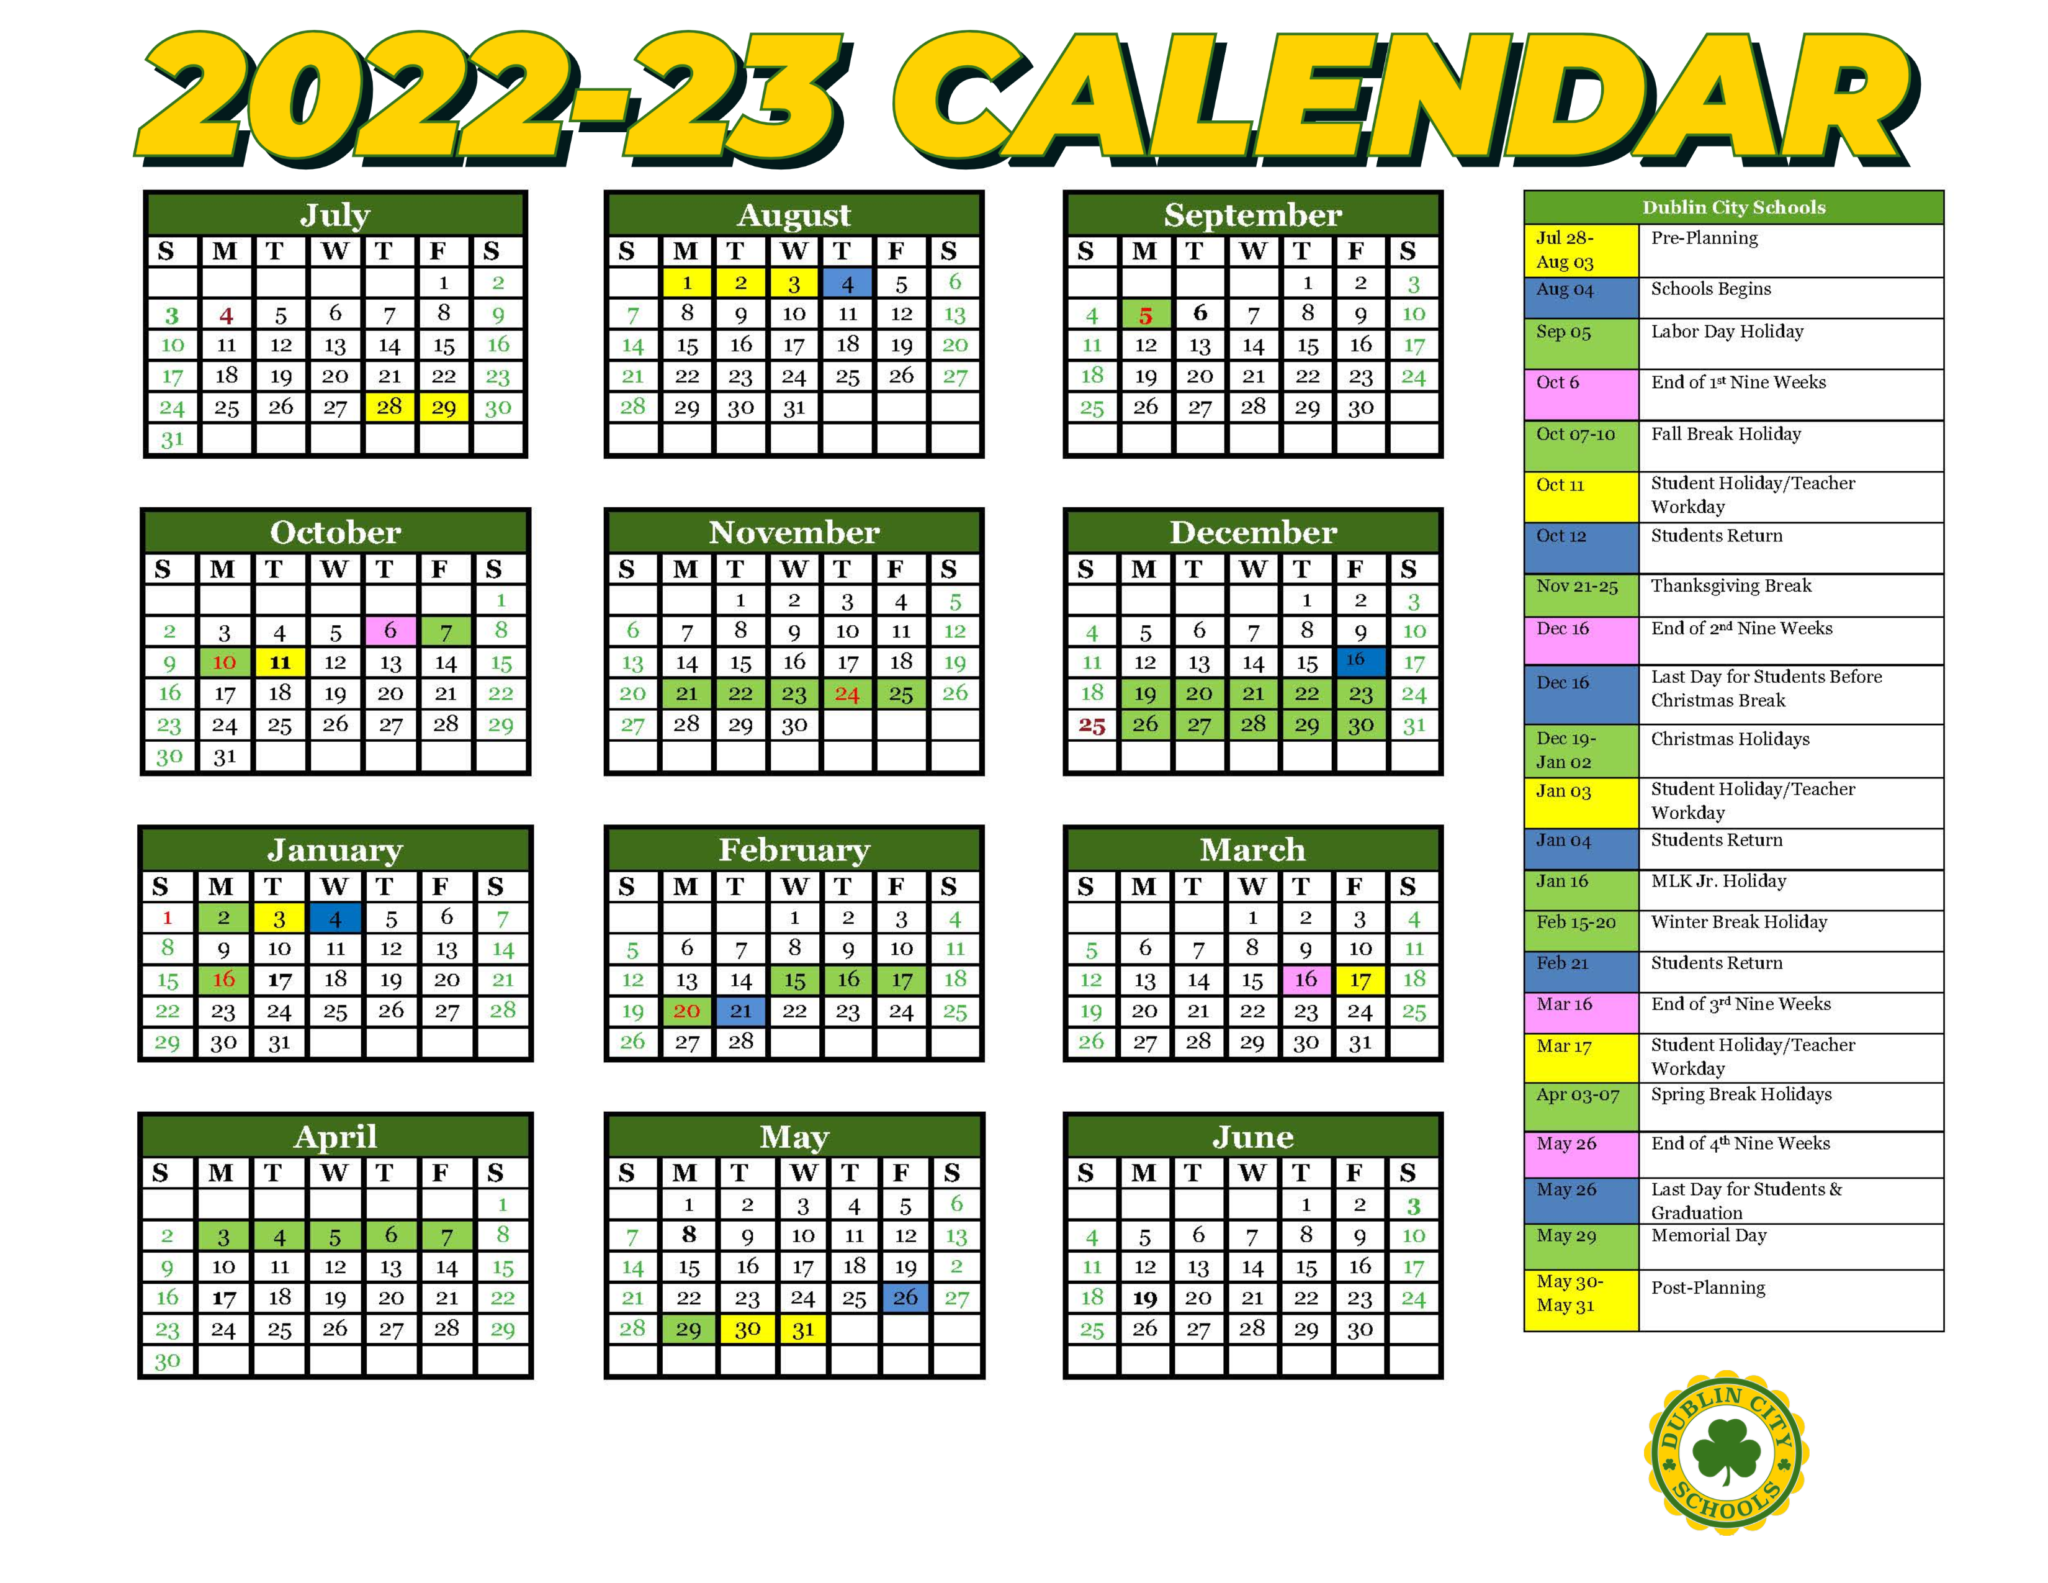 Dublin City Schools Calendar Holidays 2022 2023 in PDF